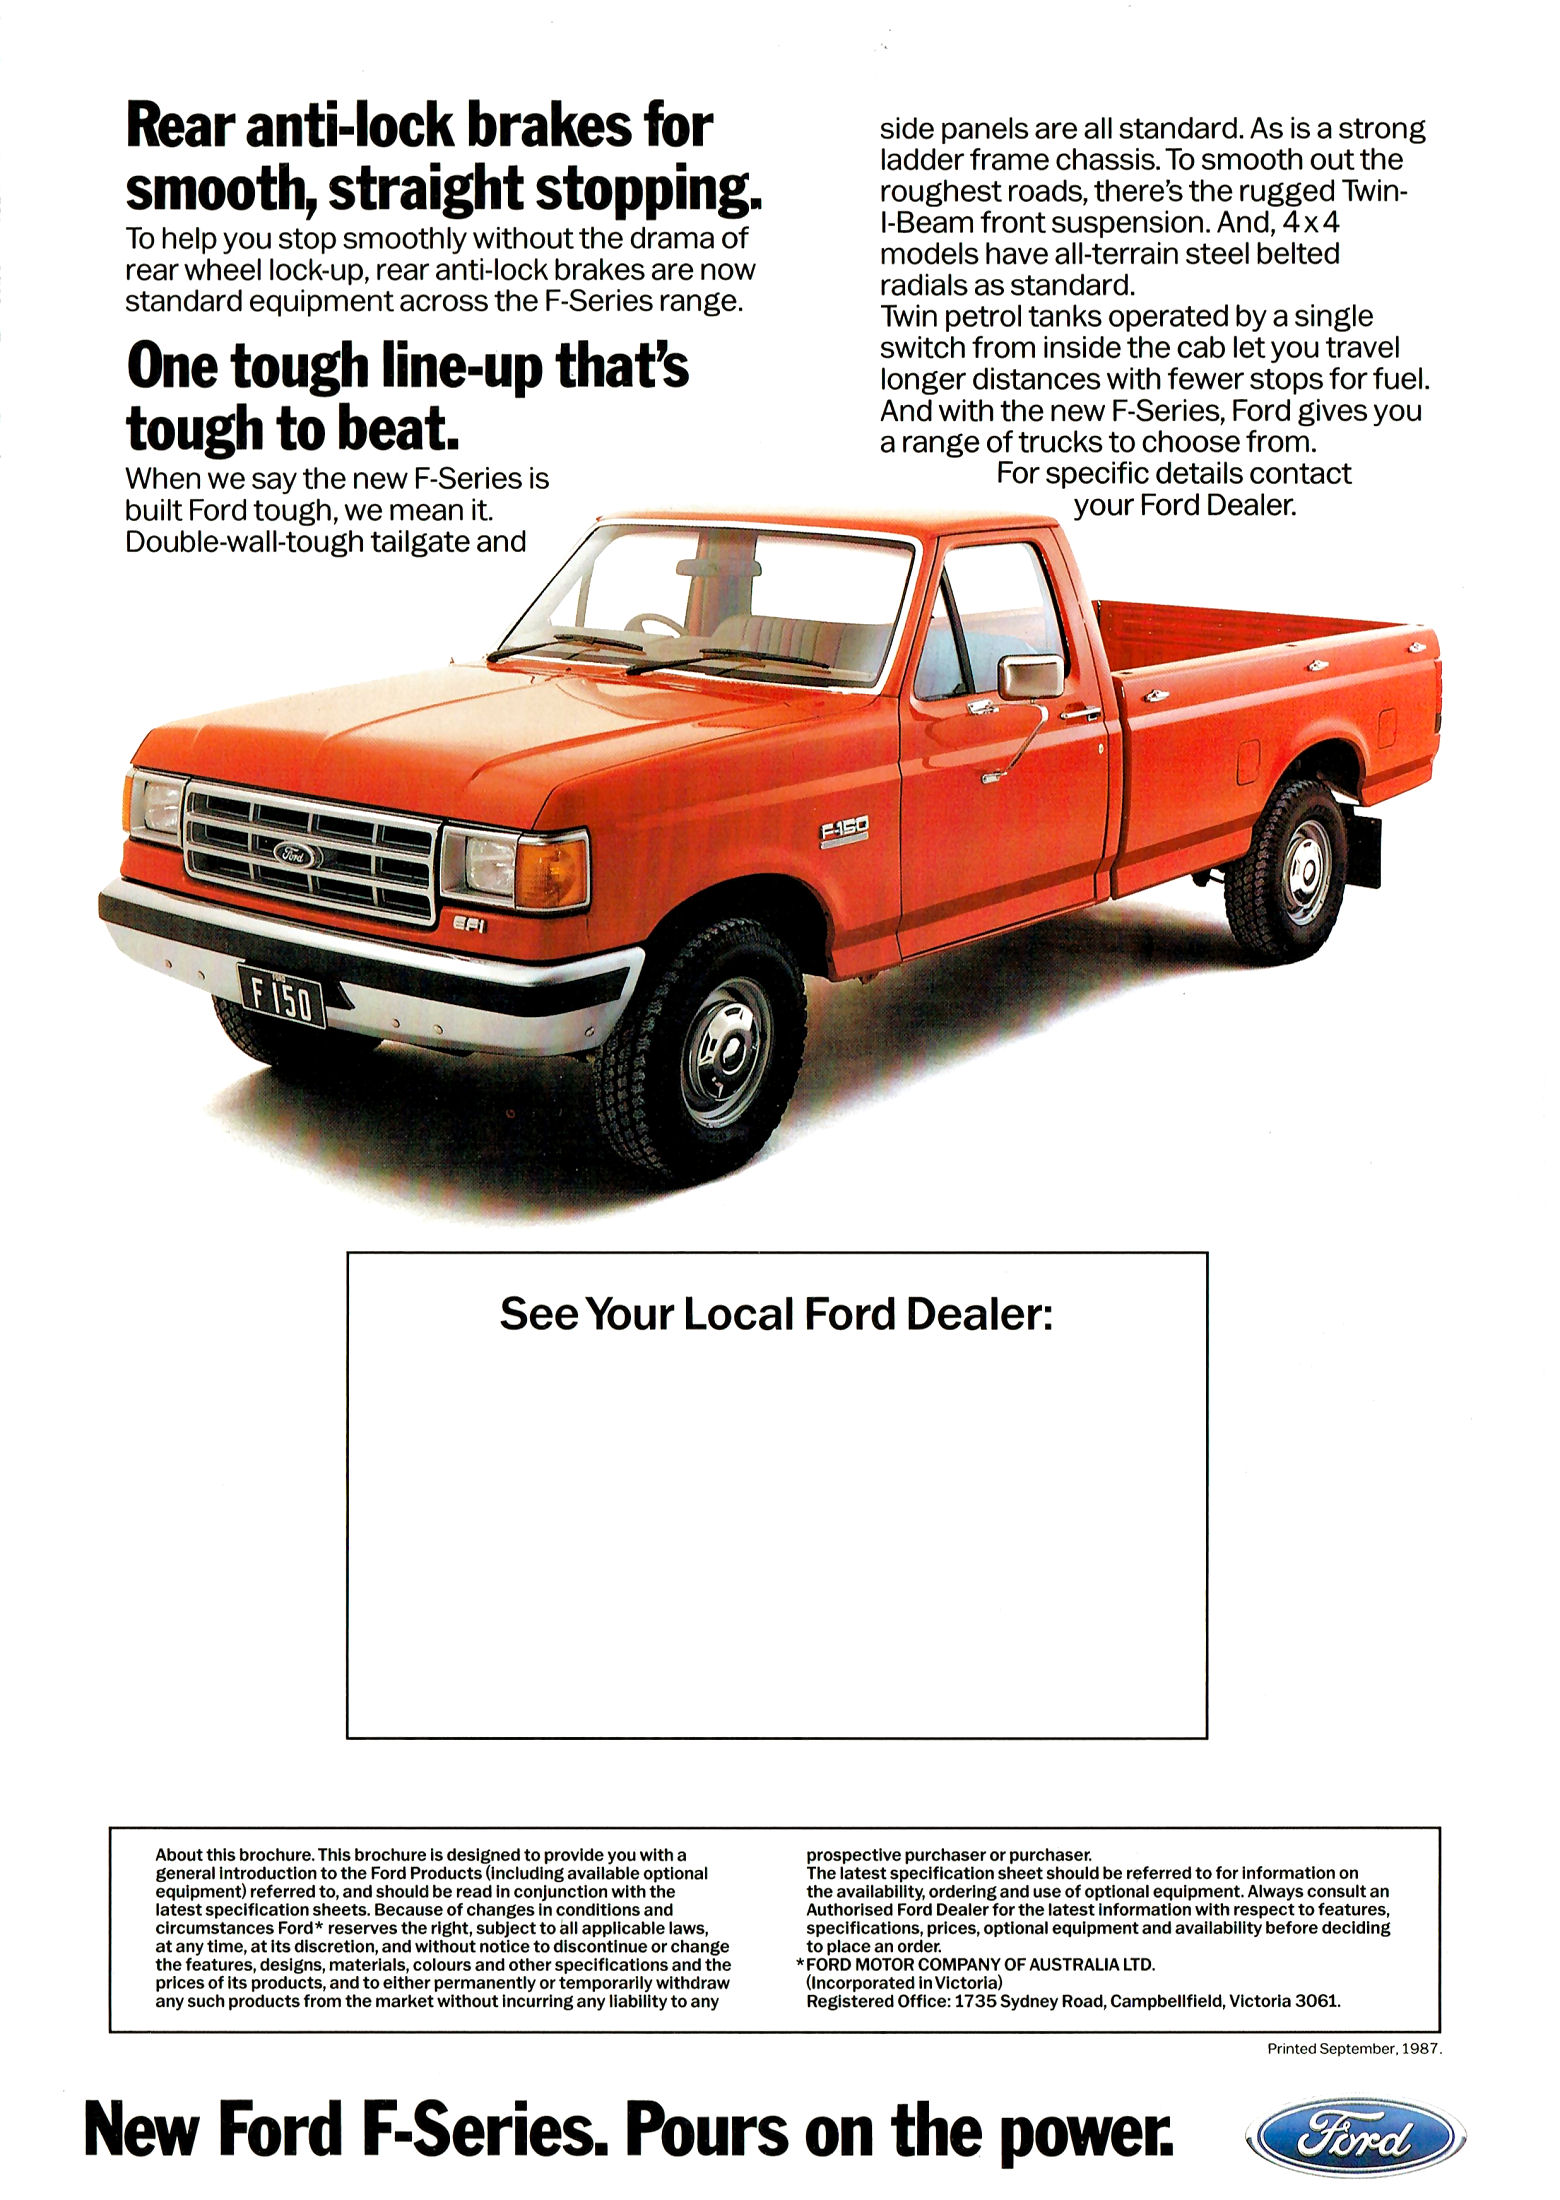 1987 Ford F Series Trucks (Aus)-06.jpg-2022-12-7 13.52.52